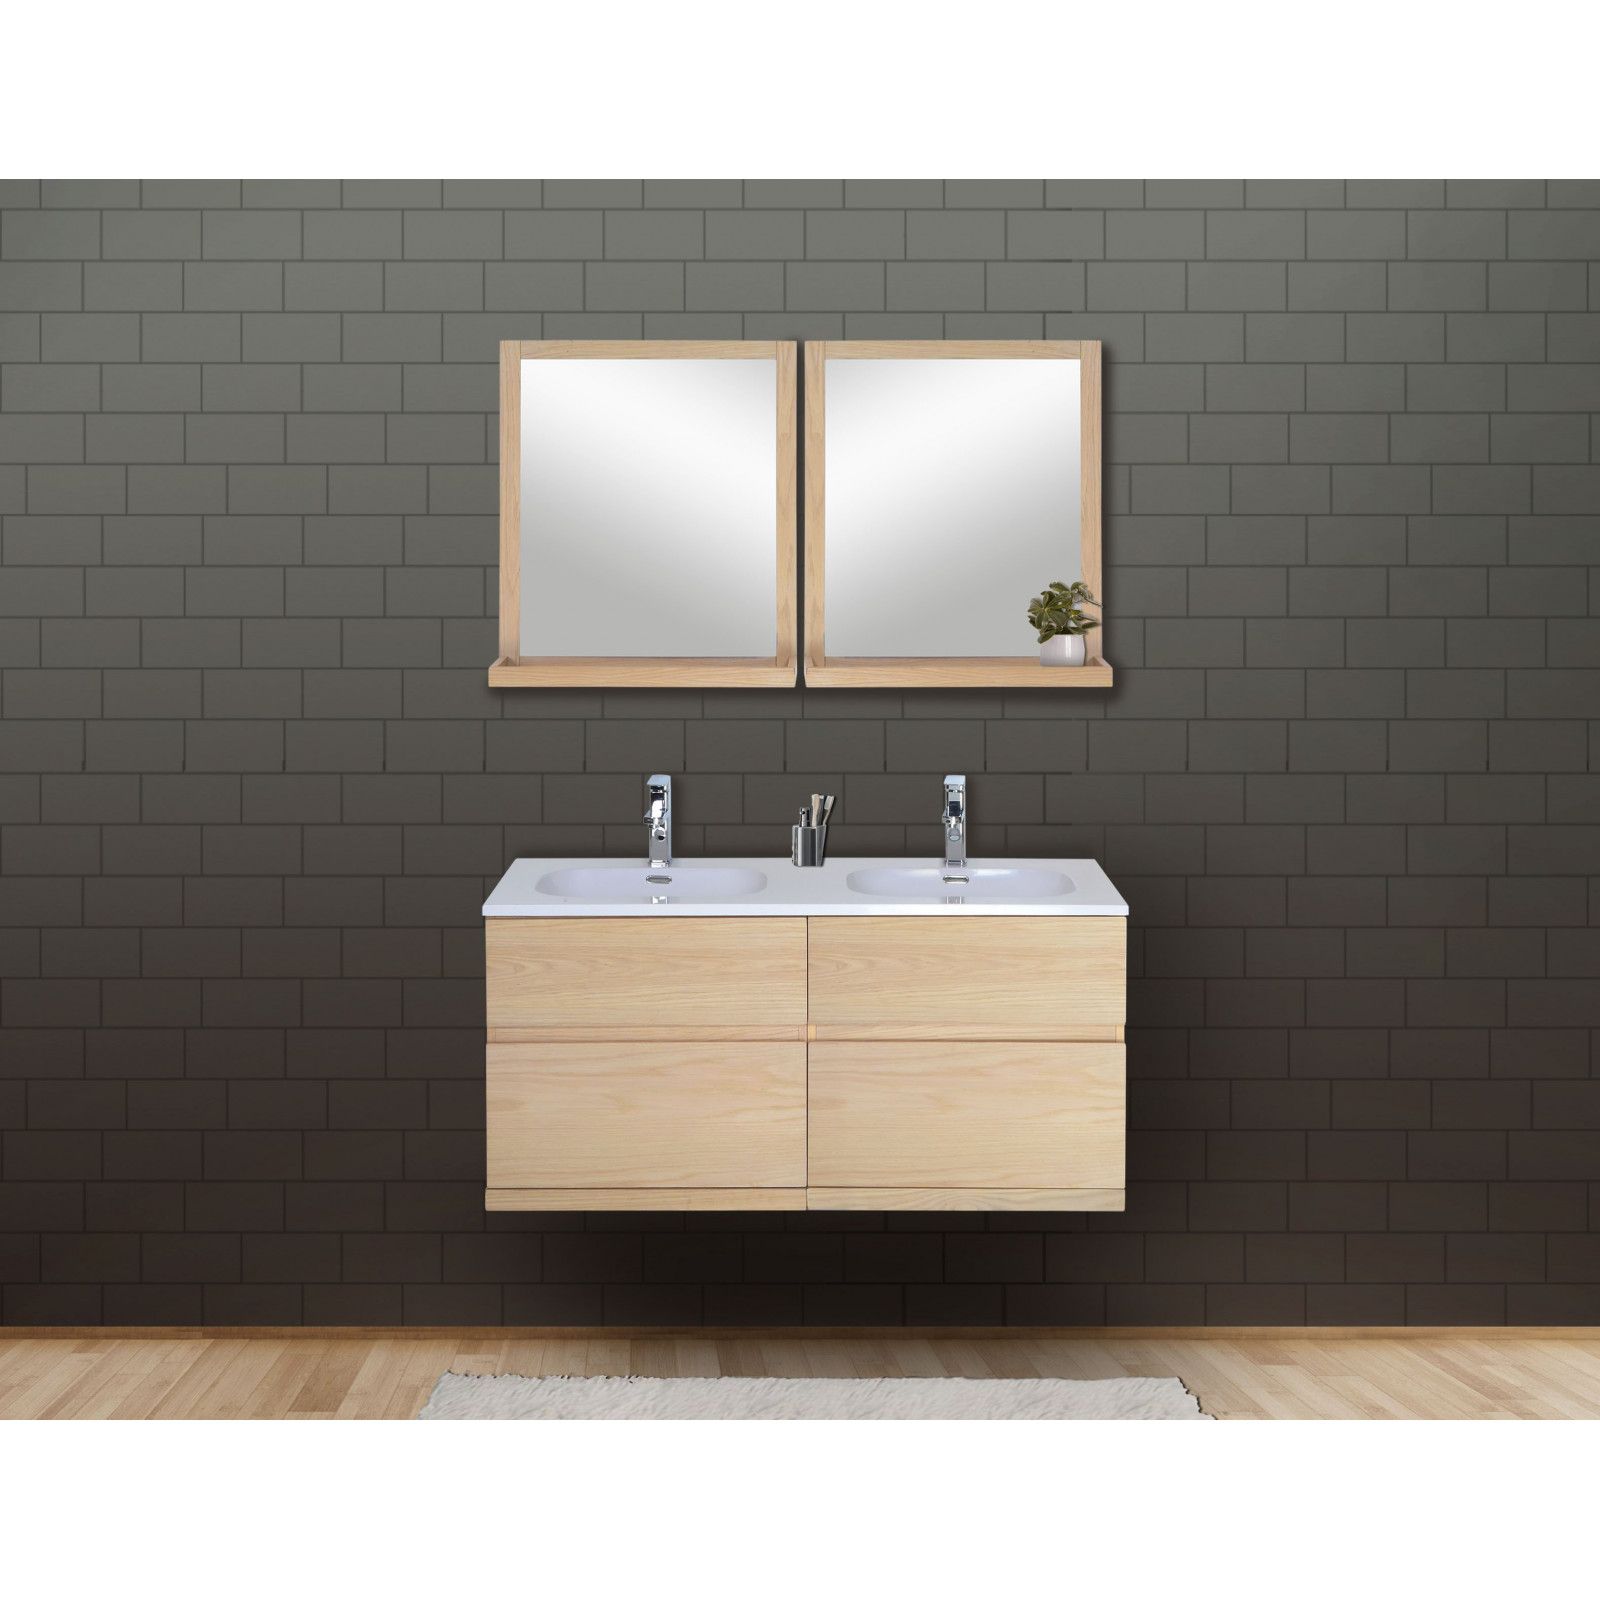 Ensemble salle de bain chêne 120 cm meuble + vasque + 2 miroirs ENIO